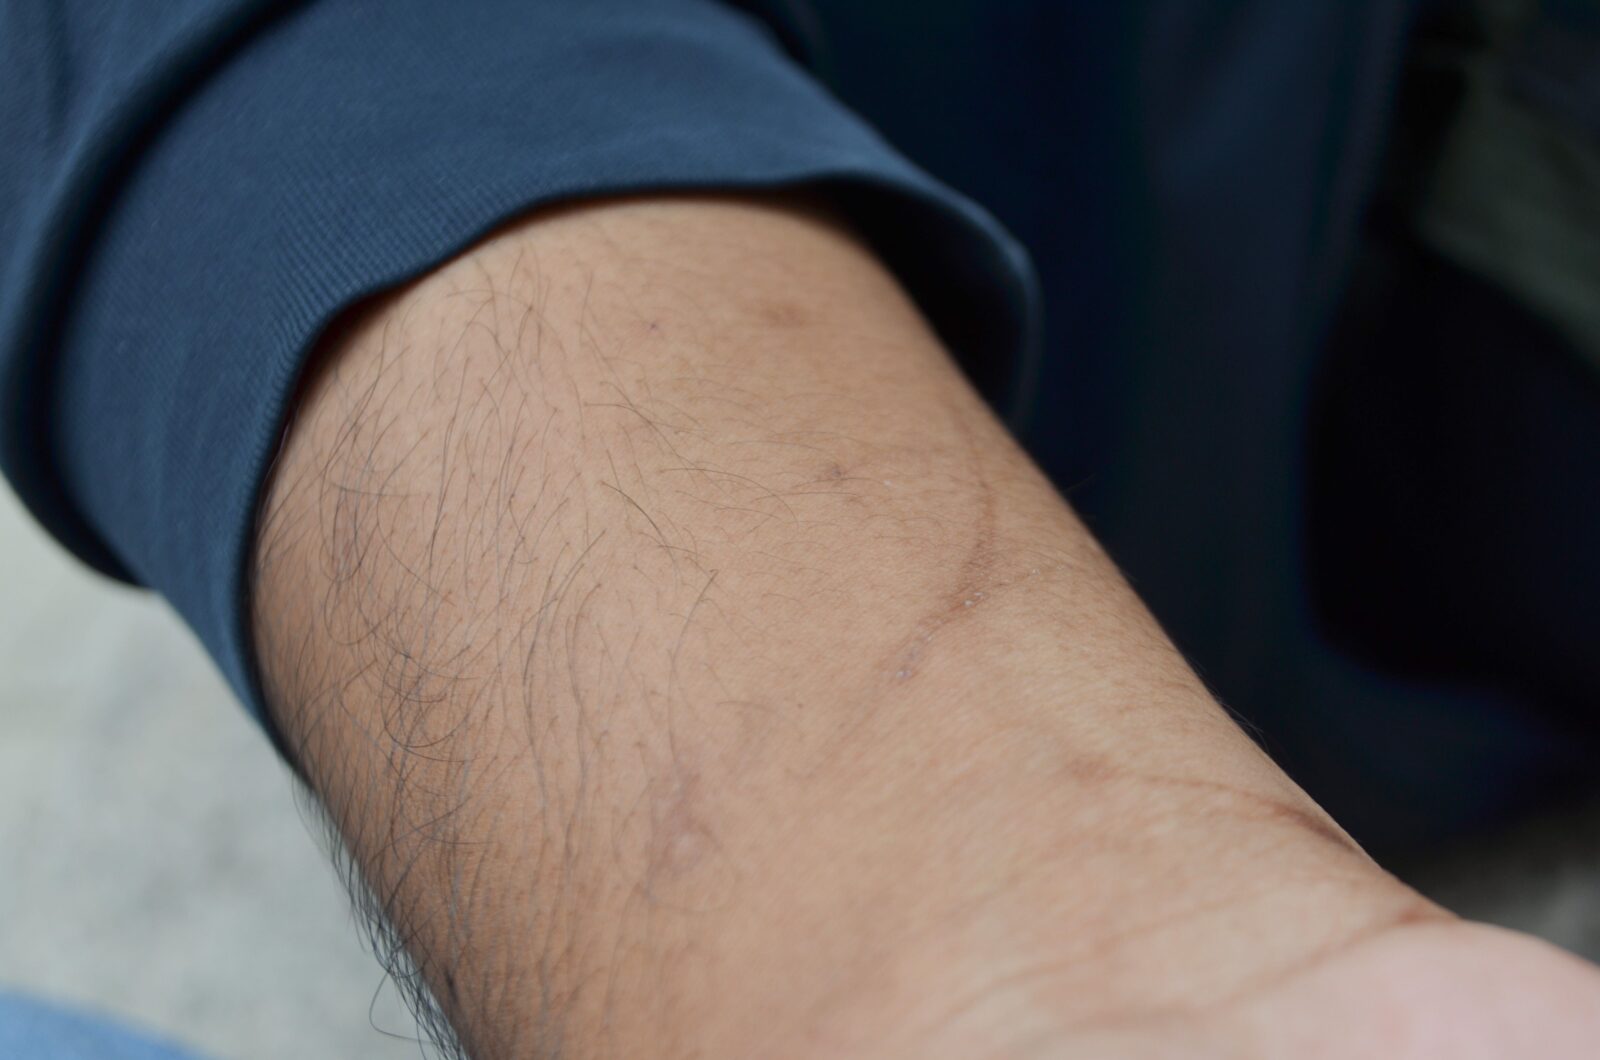 dog bite scars on a man's hand